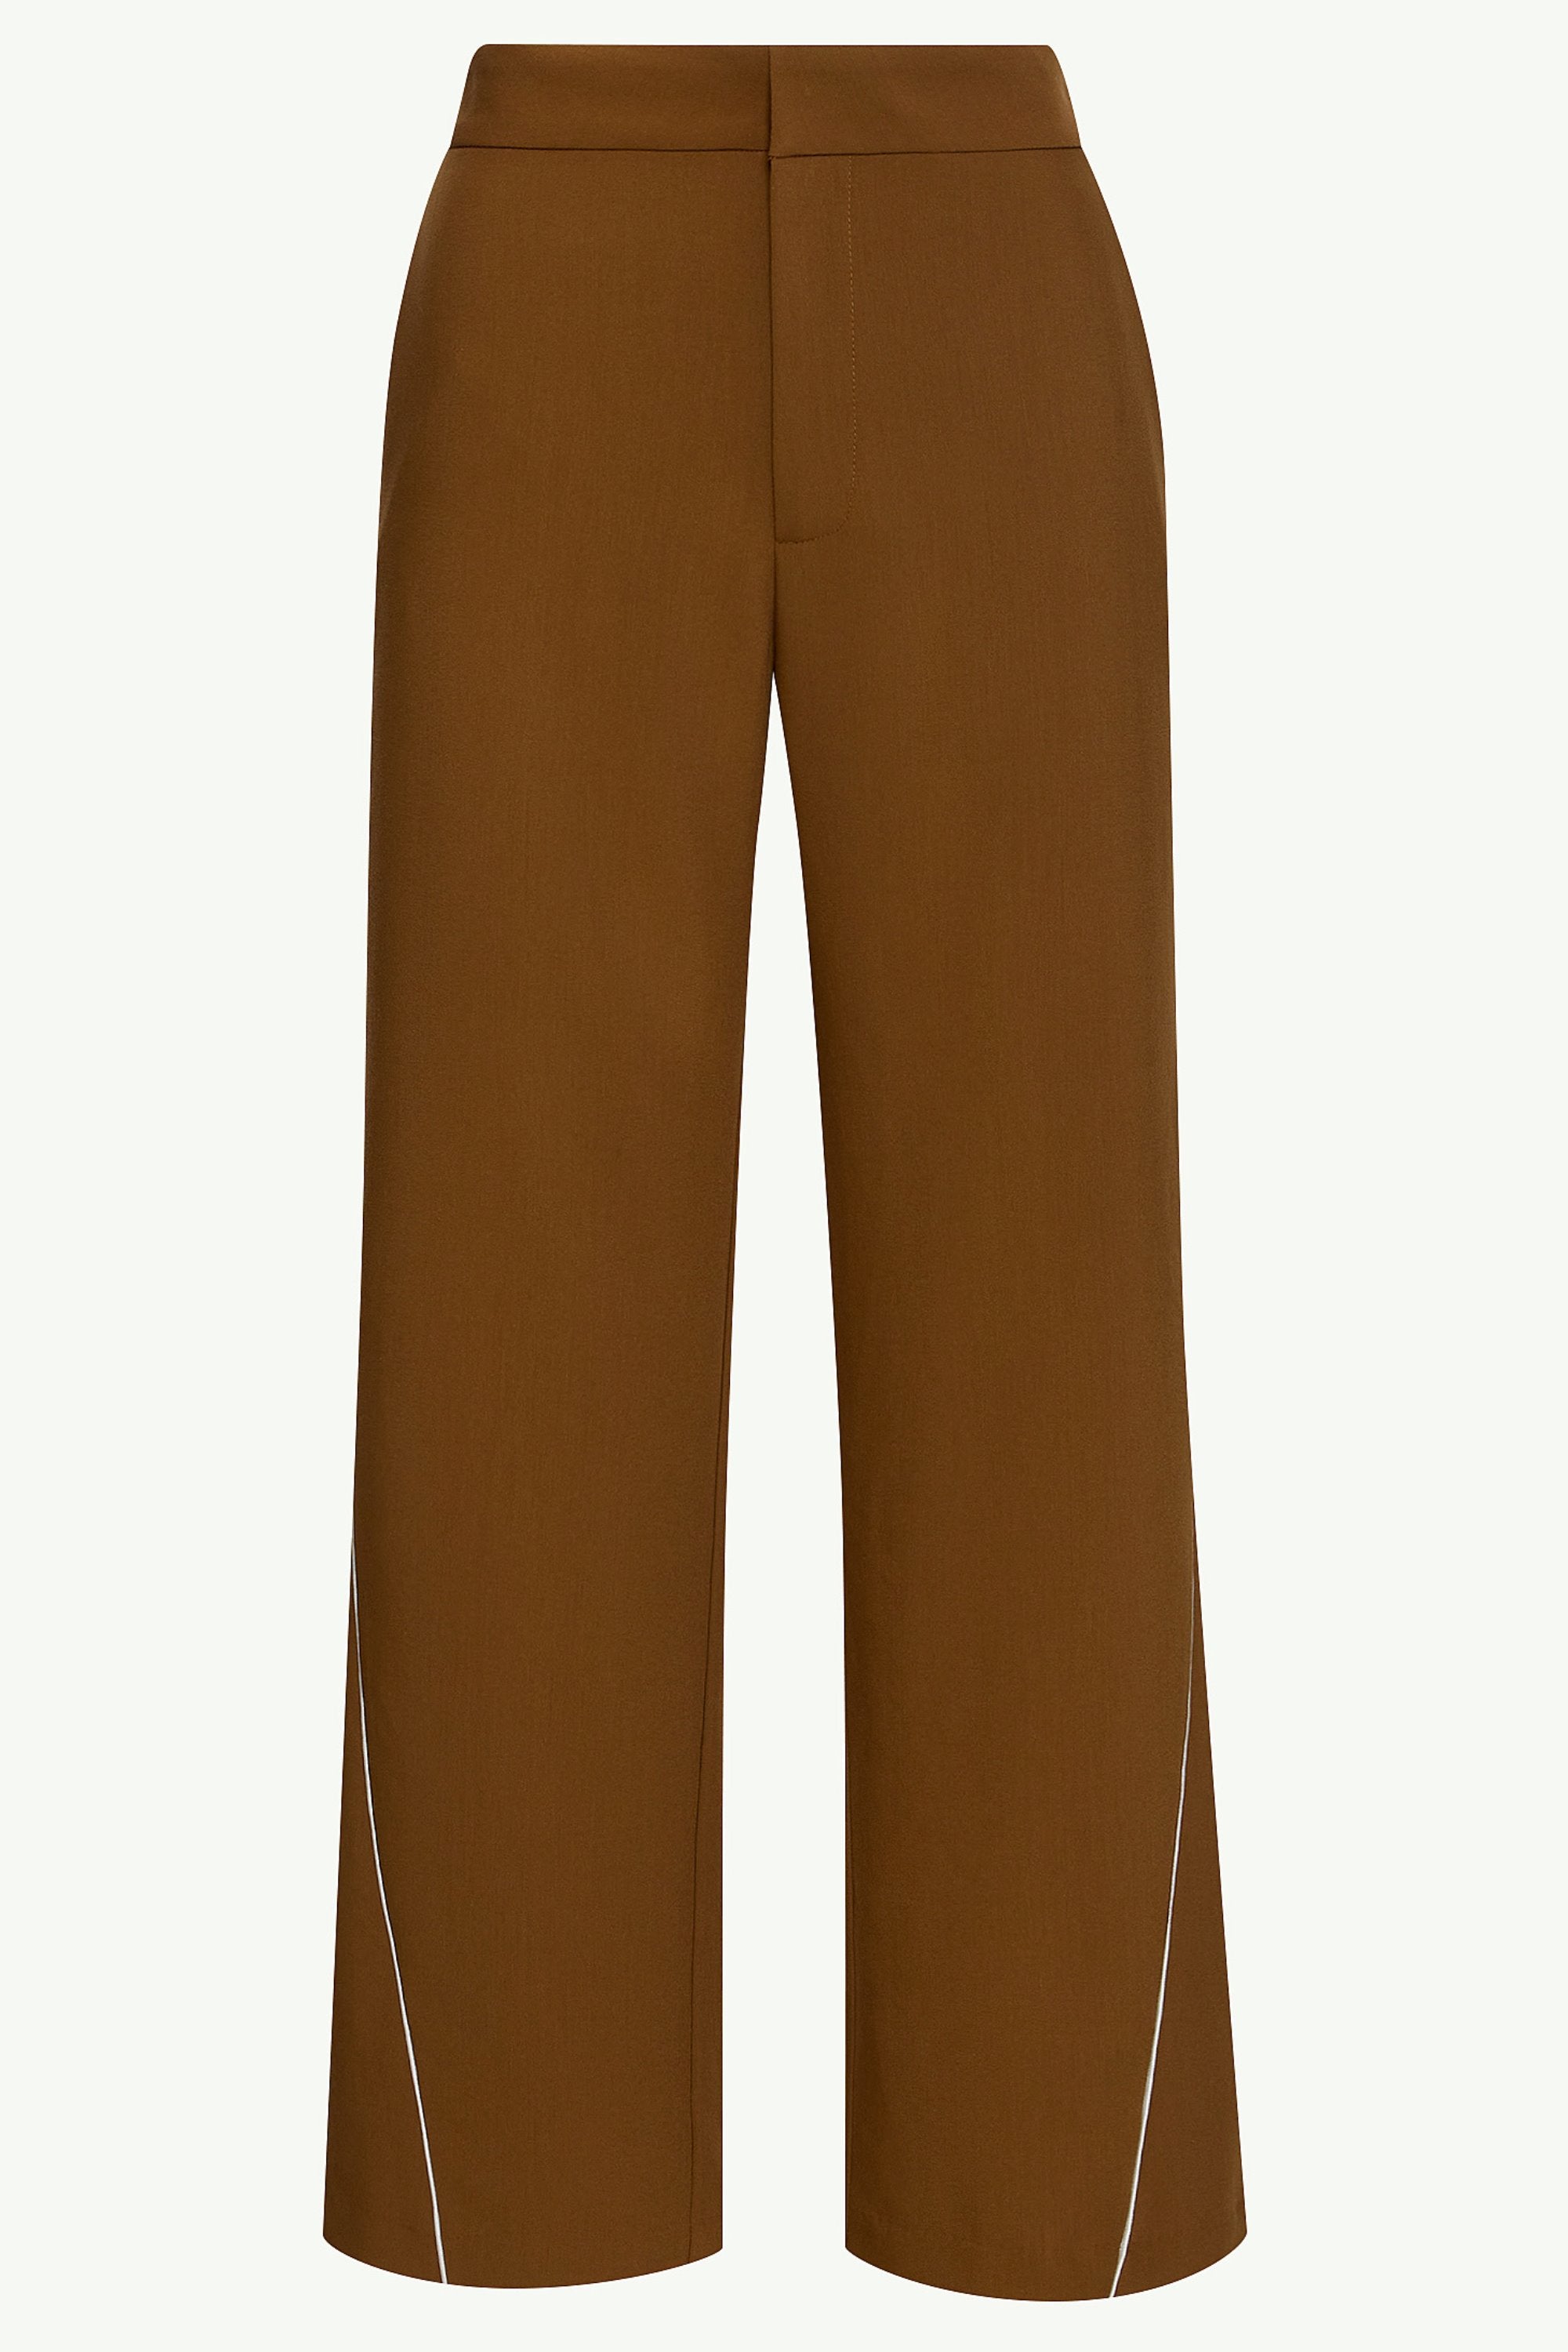 Brown Plaid Suspender Wool Pants Women, Autumn Winter Straight-leg Pants,  High Waist Pants, Long Suspender Pants, Custom Made Pants 3964 -  Canada